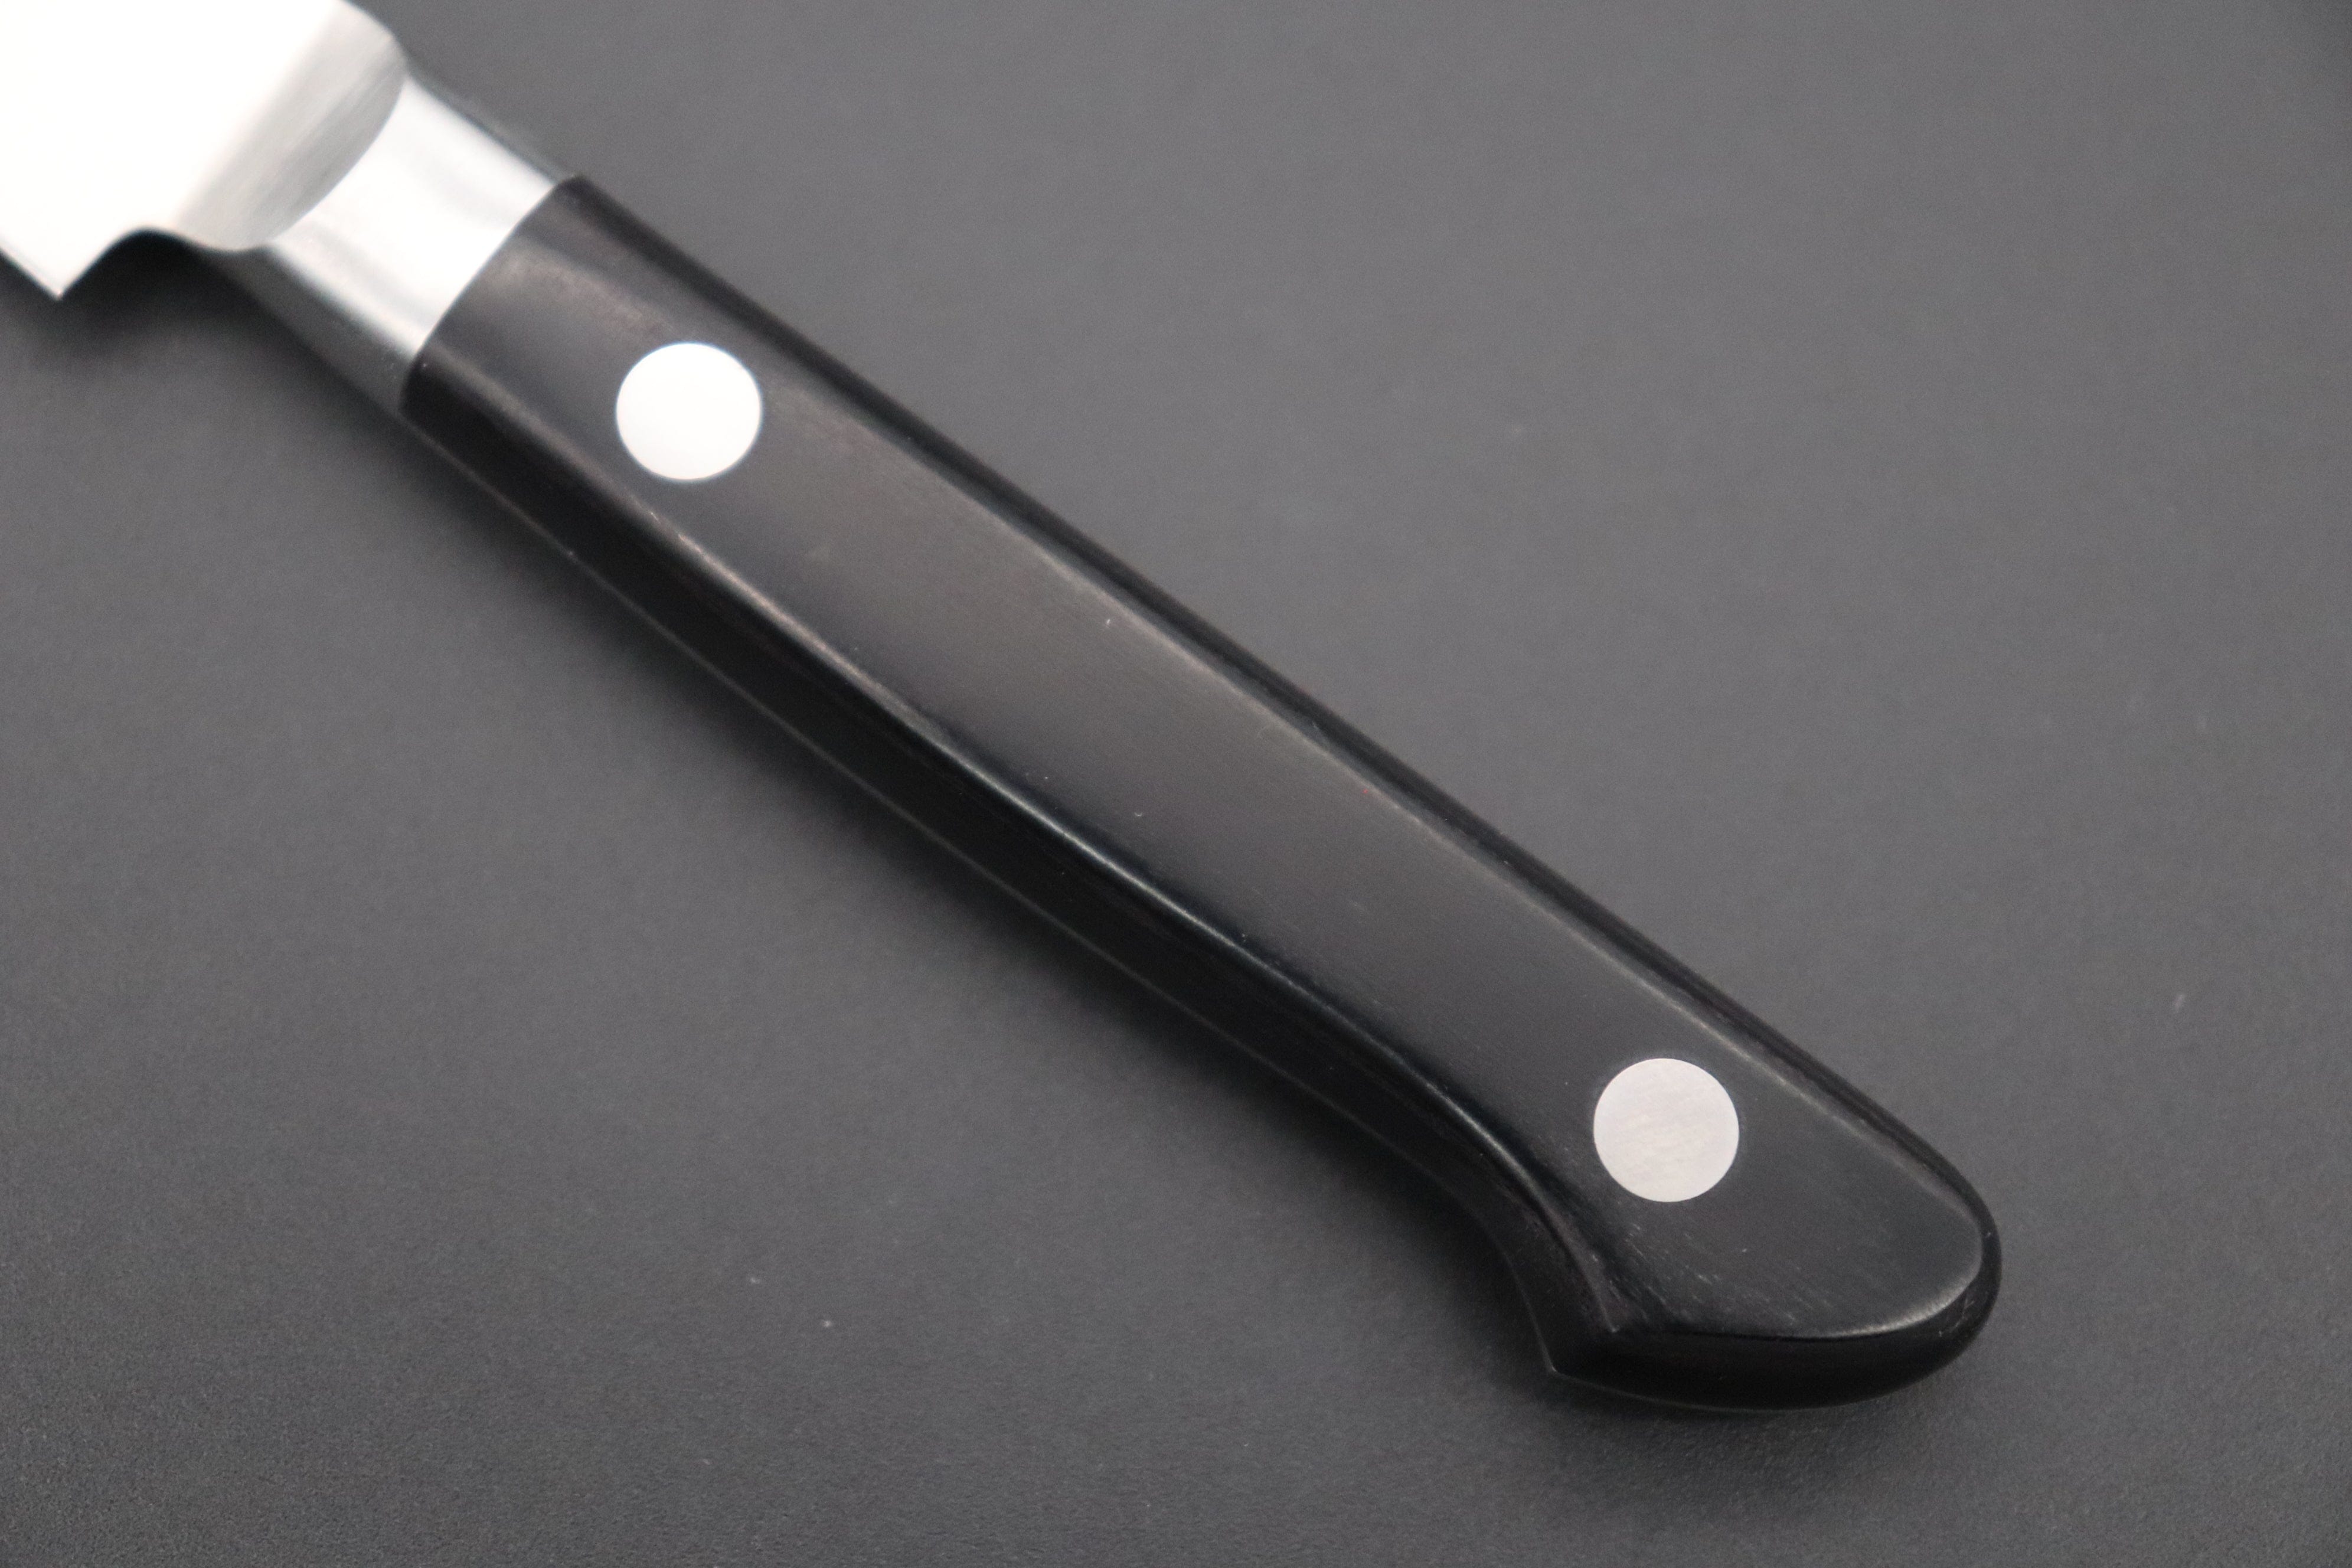 Misono Molybdenum Steel Knives - 80mm